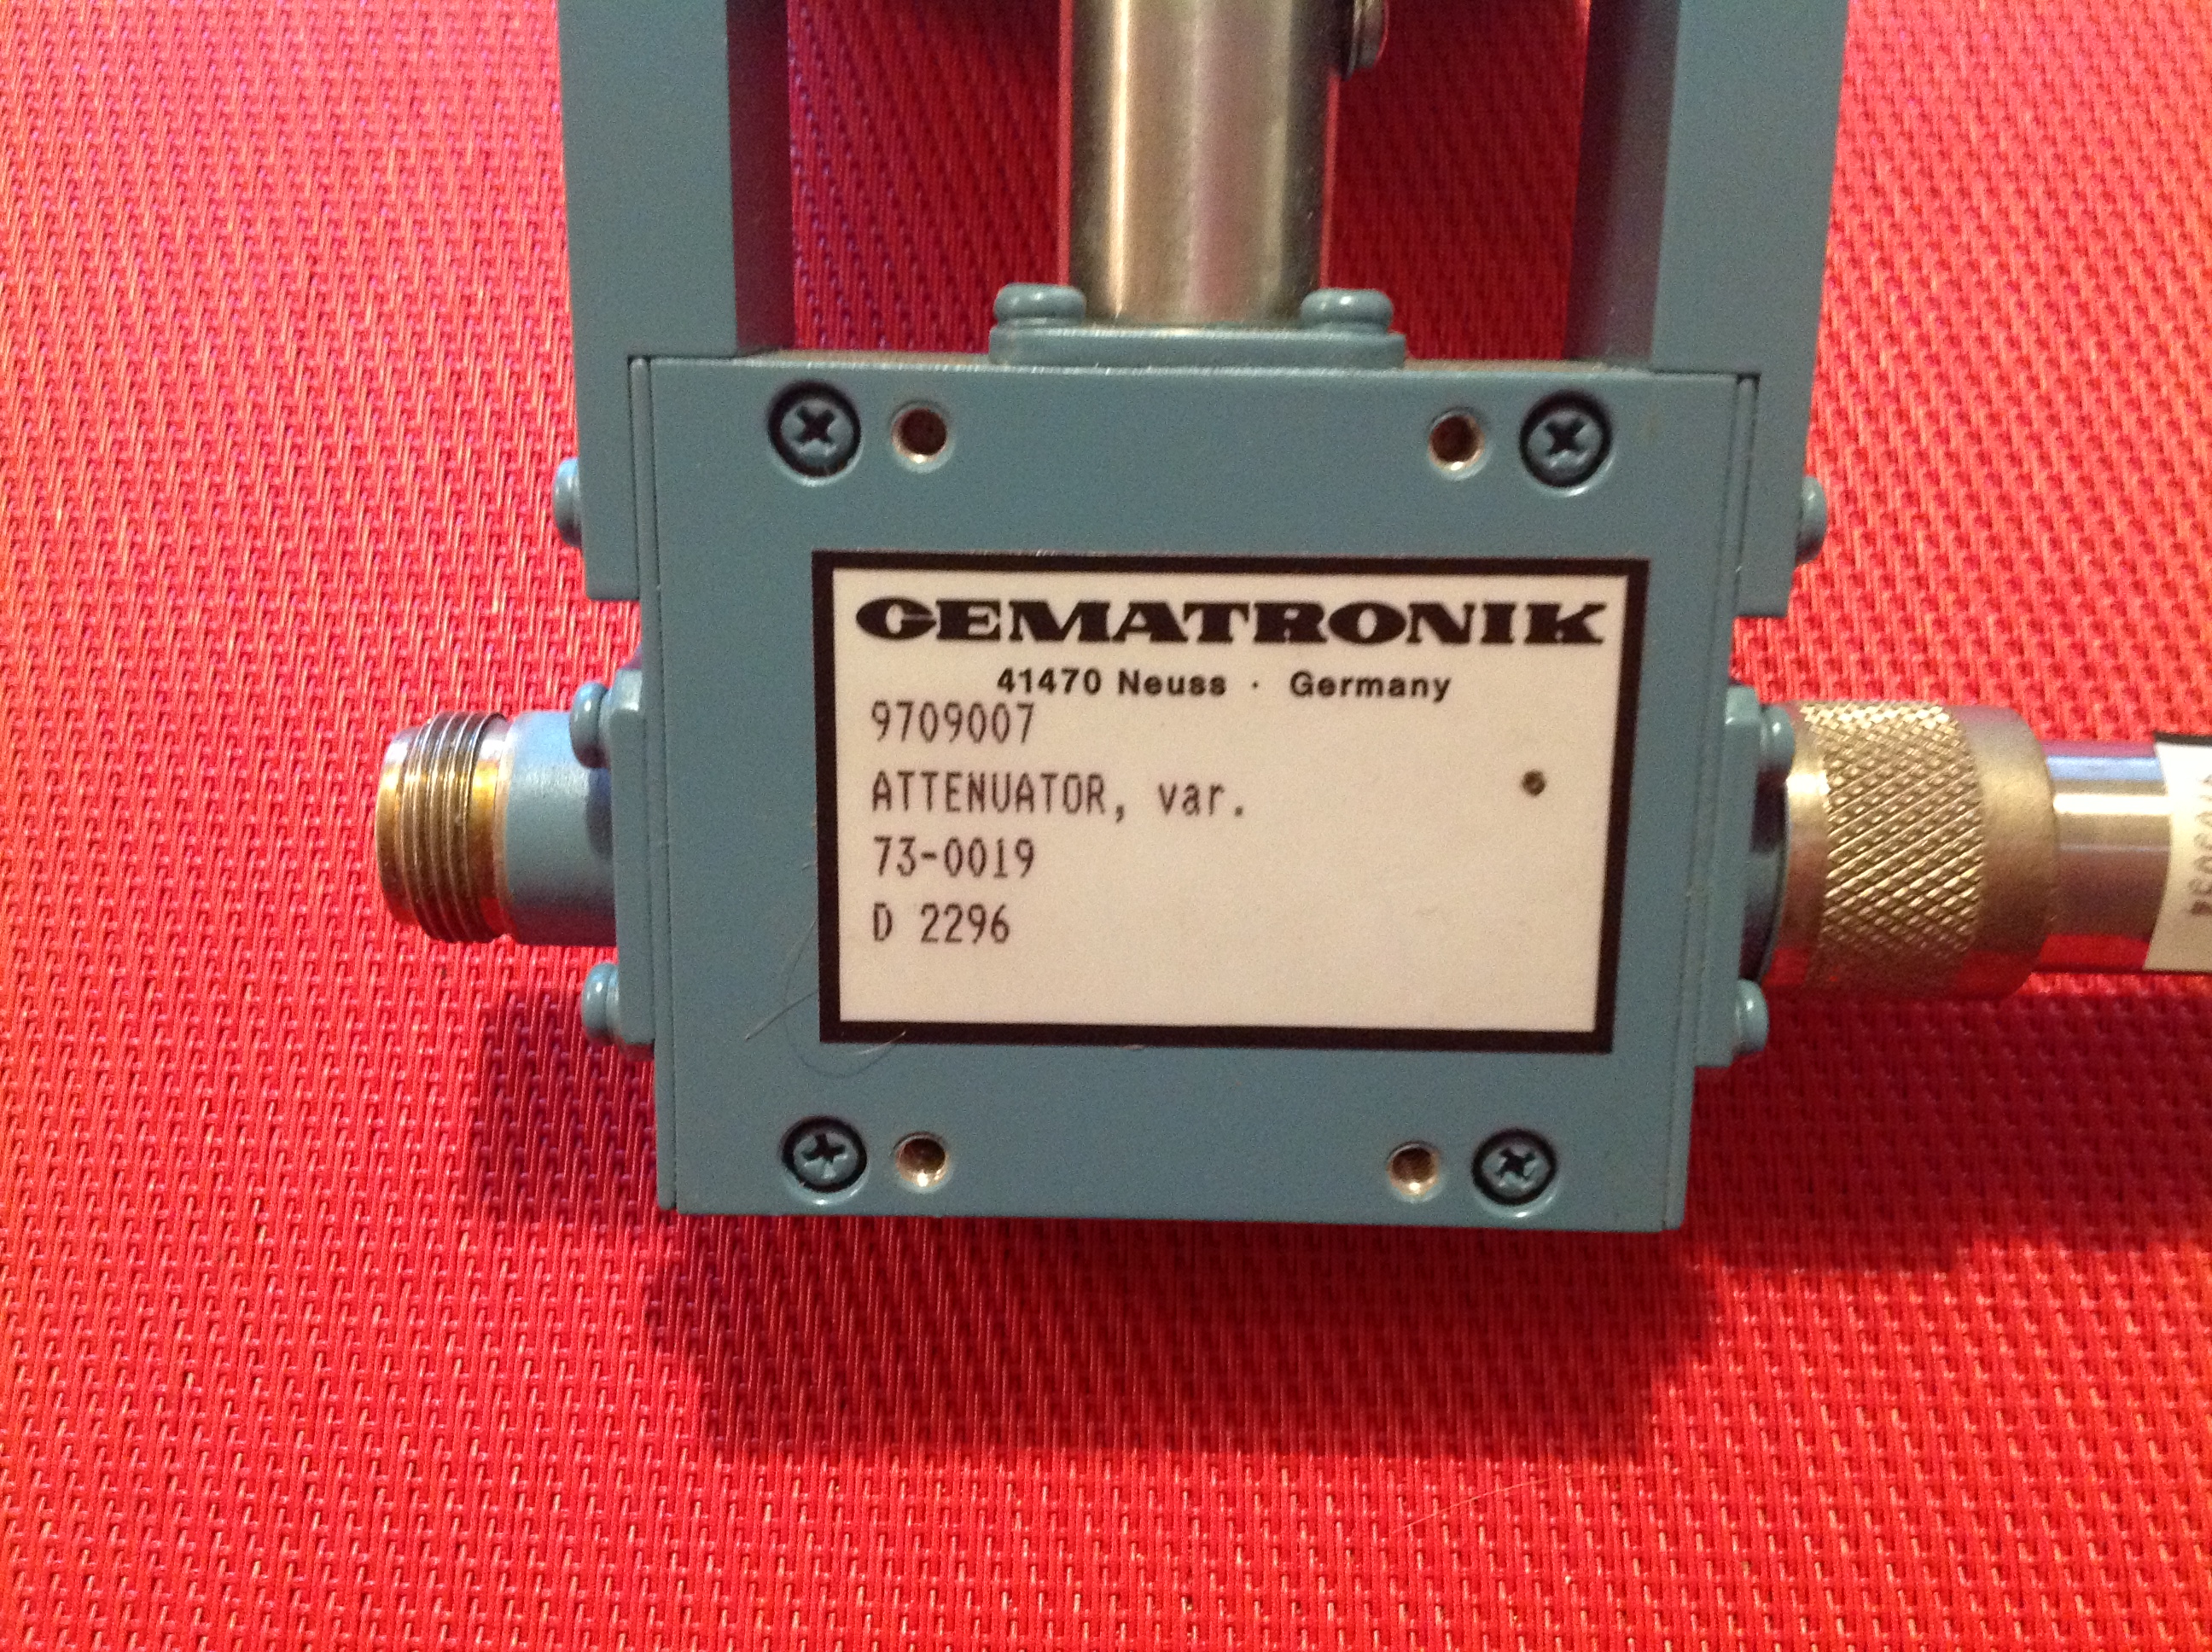 Einstellbarer Coaxial Attenuator Merrimac Mod. MFR-12457, AUP-25 ASN, LOT 45666